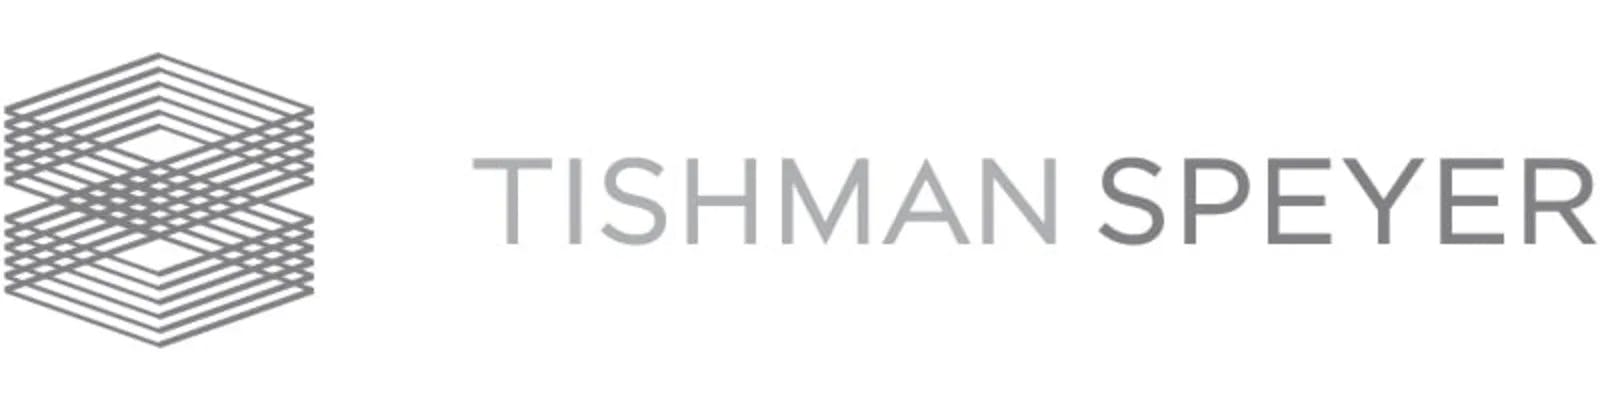 Tishman speyer logo